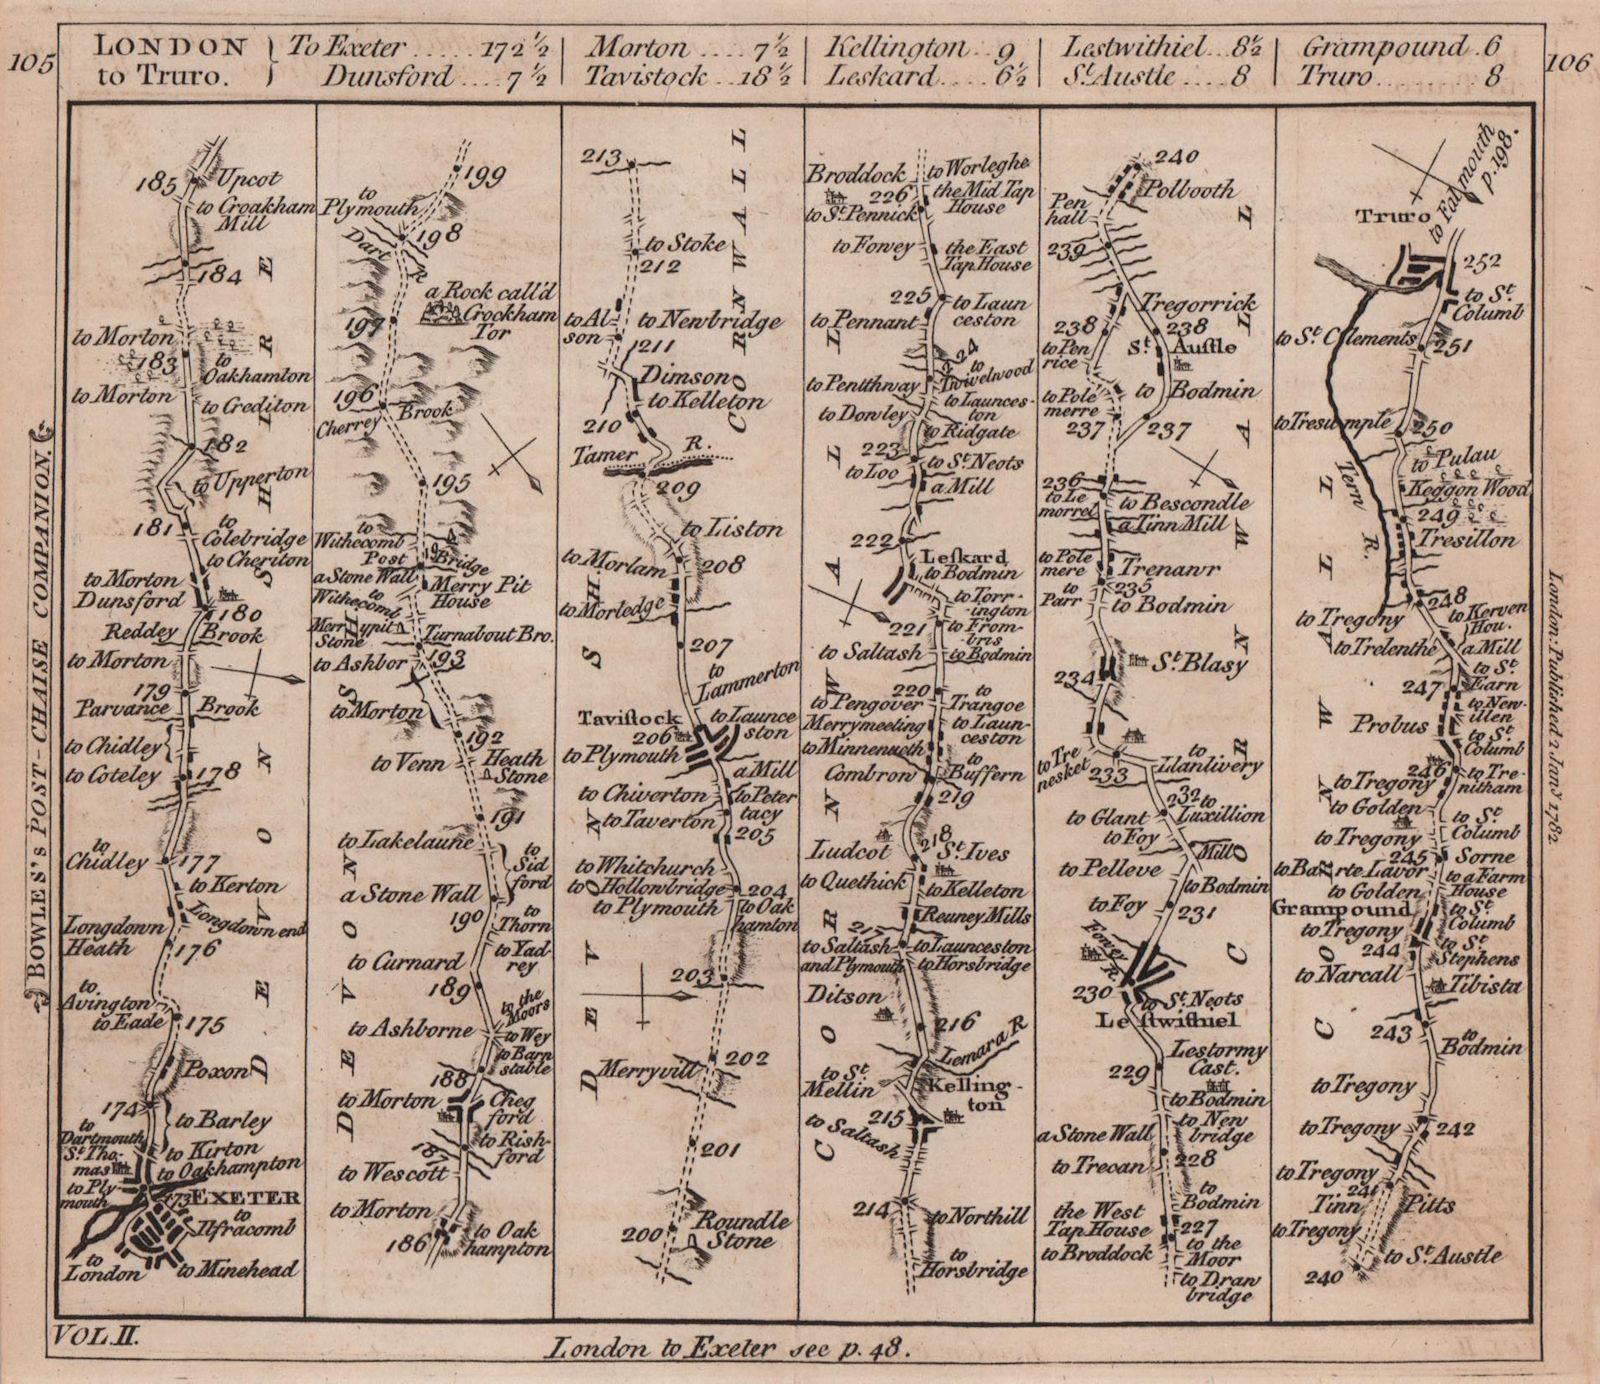 Associate Product Exeter-Tavistock-Liskeard-St Austell-Truro road strip map. BOWLES 1782 old